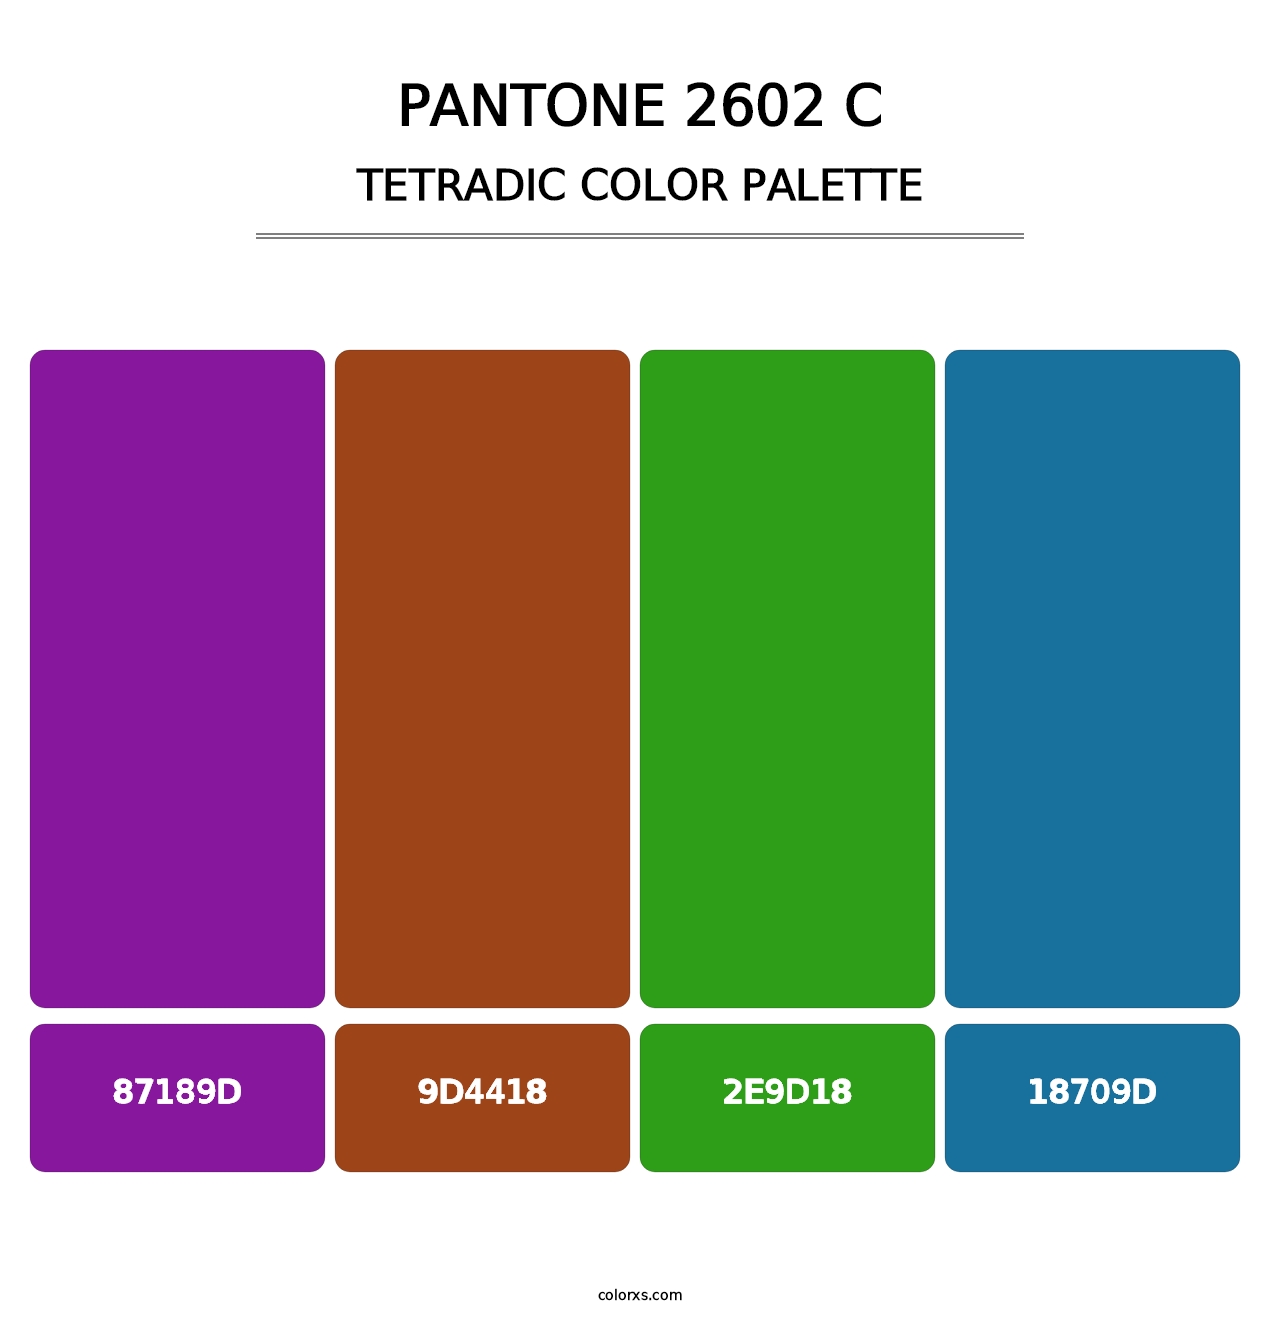 PANTONE 2602 C - Tetradic Color Palette